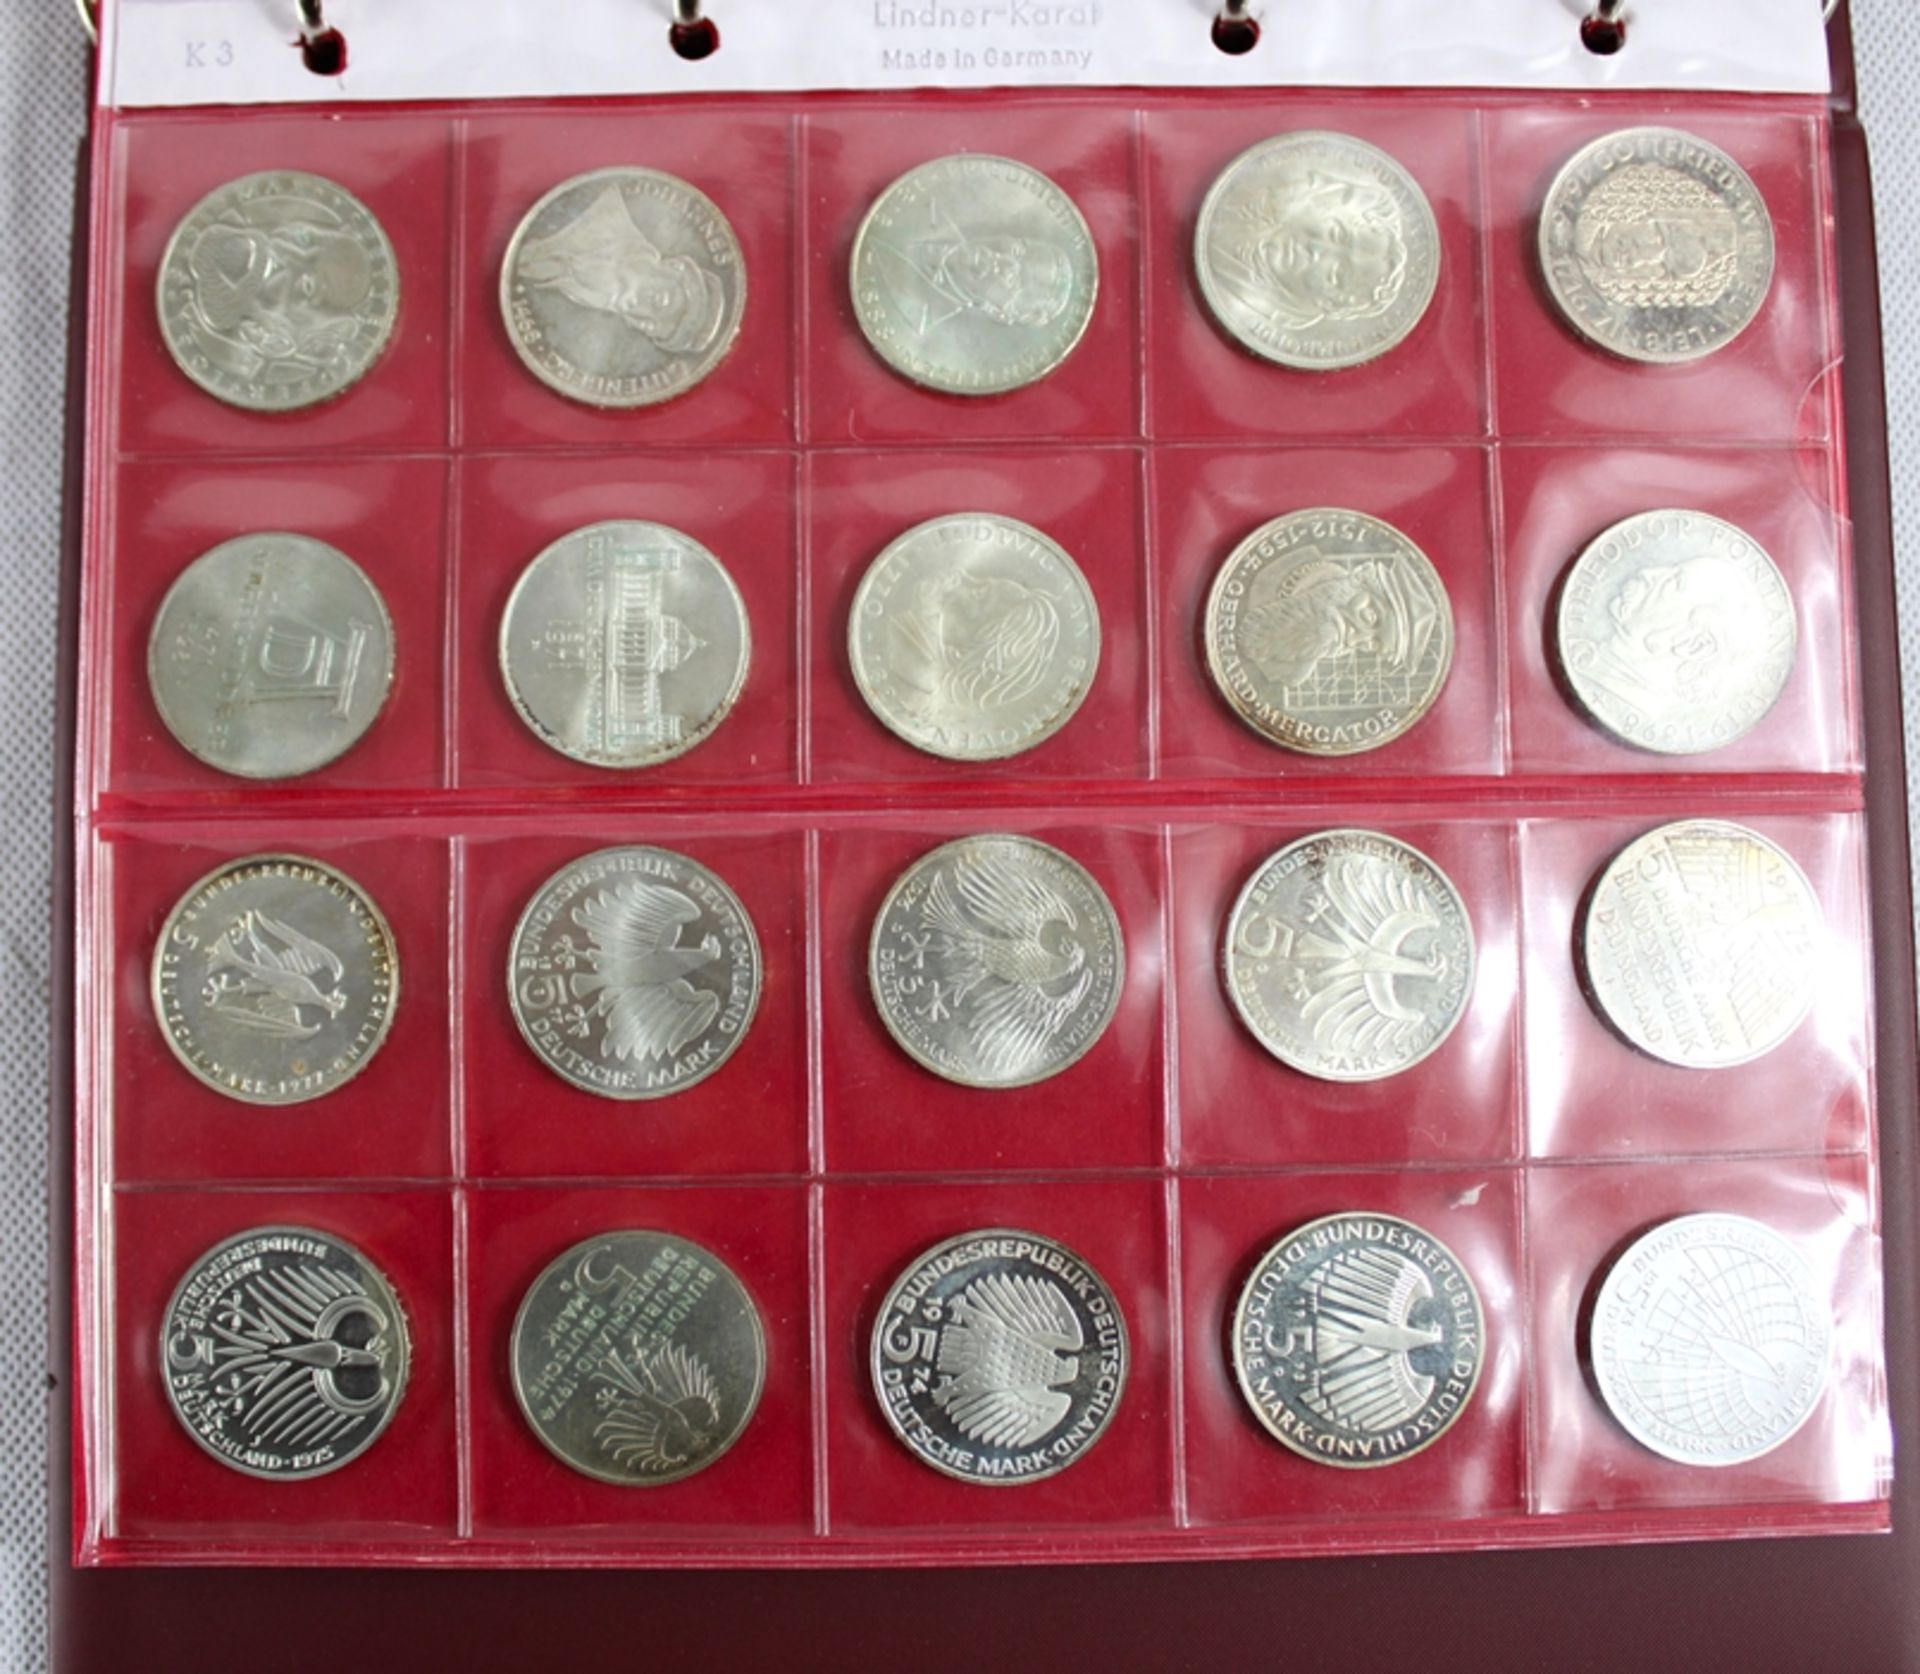 5 DM u. 10 DM Gedenkmünzen Münzsammlung, darunter 22 x 10 DM Silbermünzen u. 40 x 5 DM Silber u. Ku